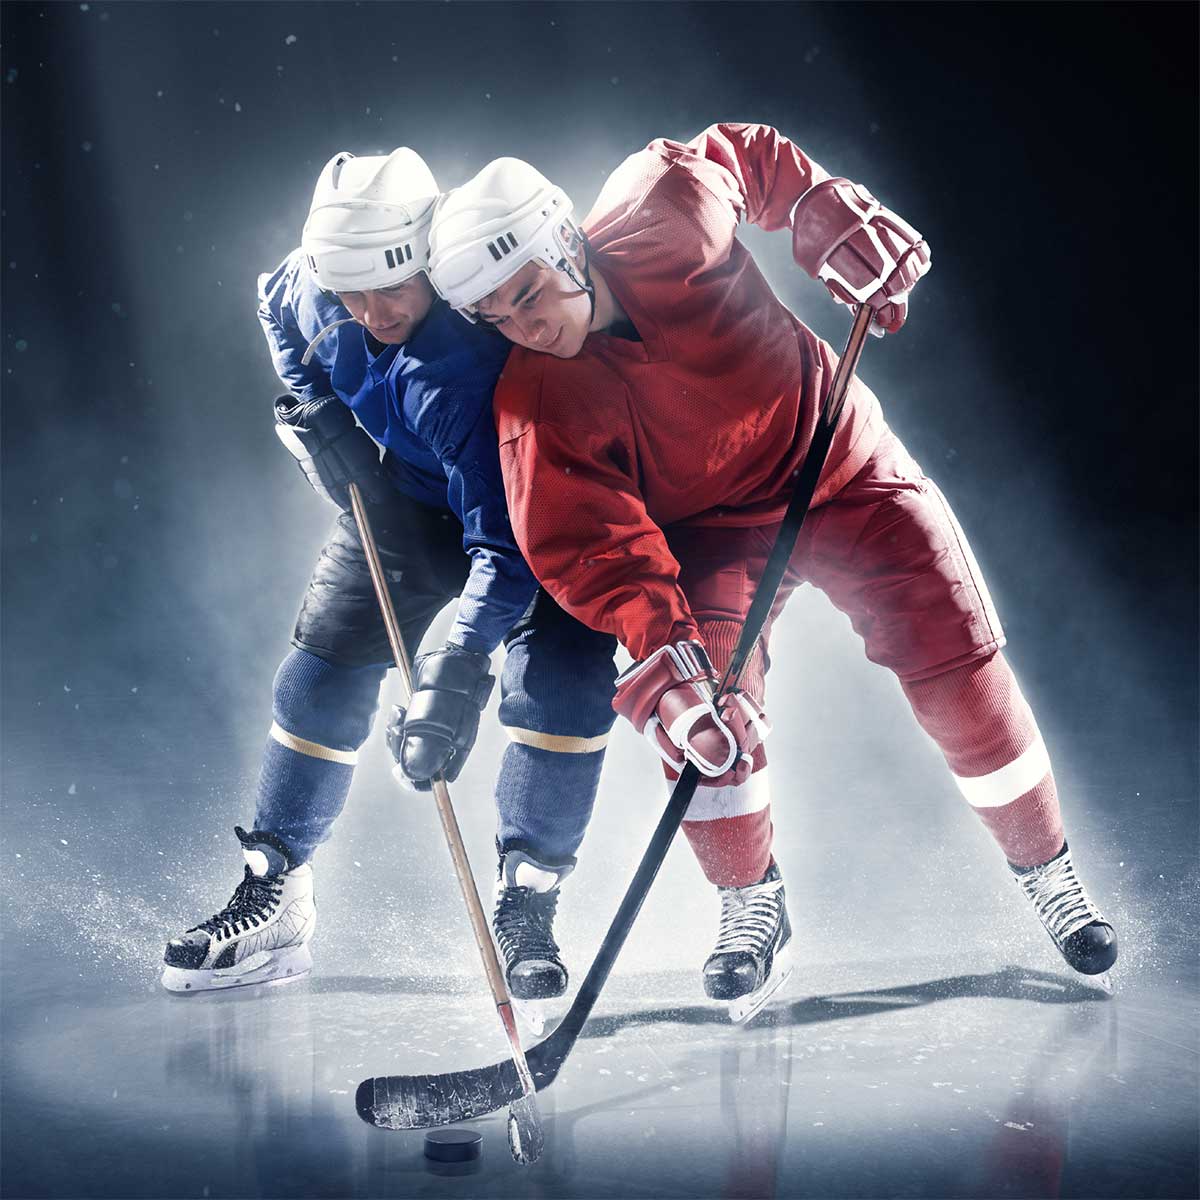 Hockey Jersey Manufacturers in Austria